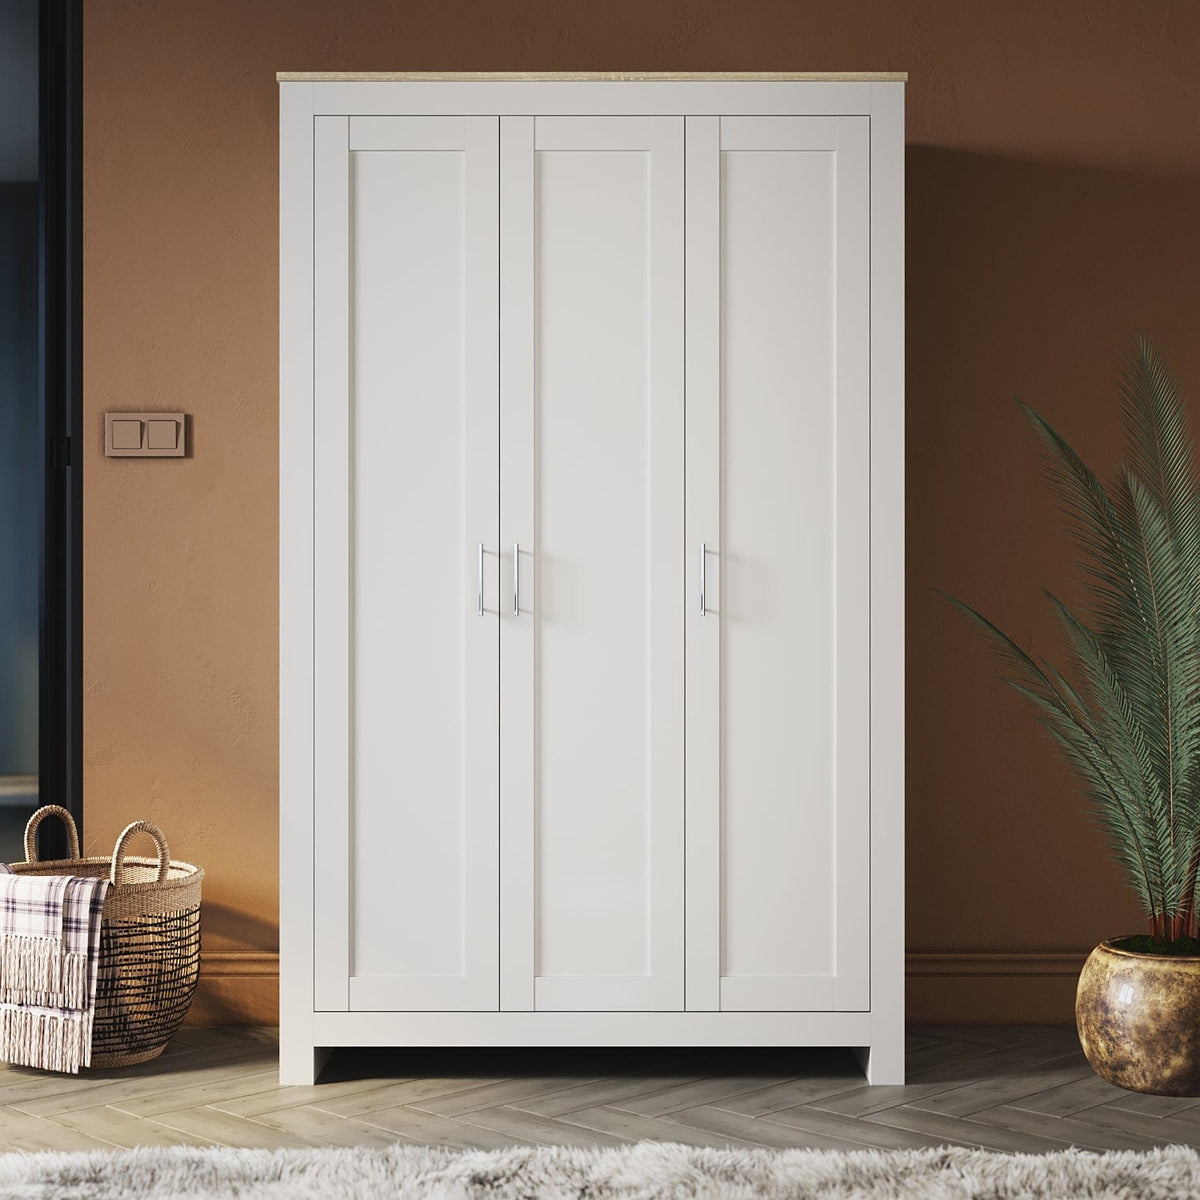 180cm Simple Design Wooden Storage Cabinet Large Grey Wardrobe with 3 Doors - Elegantshowers